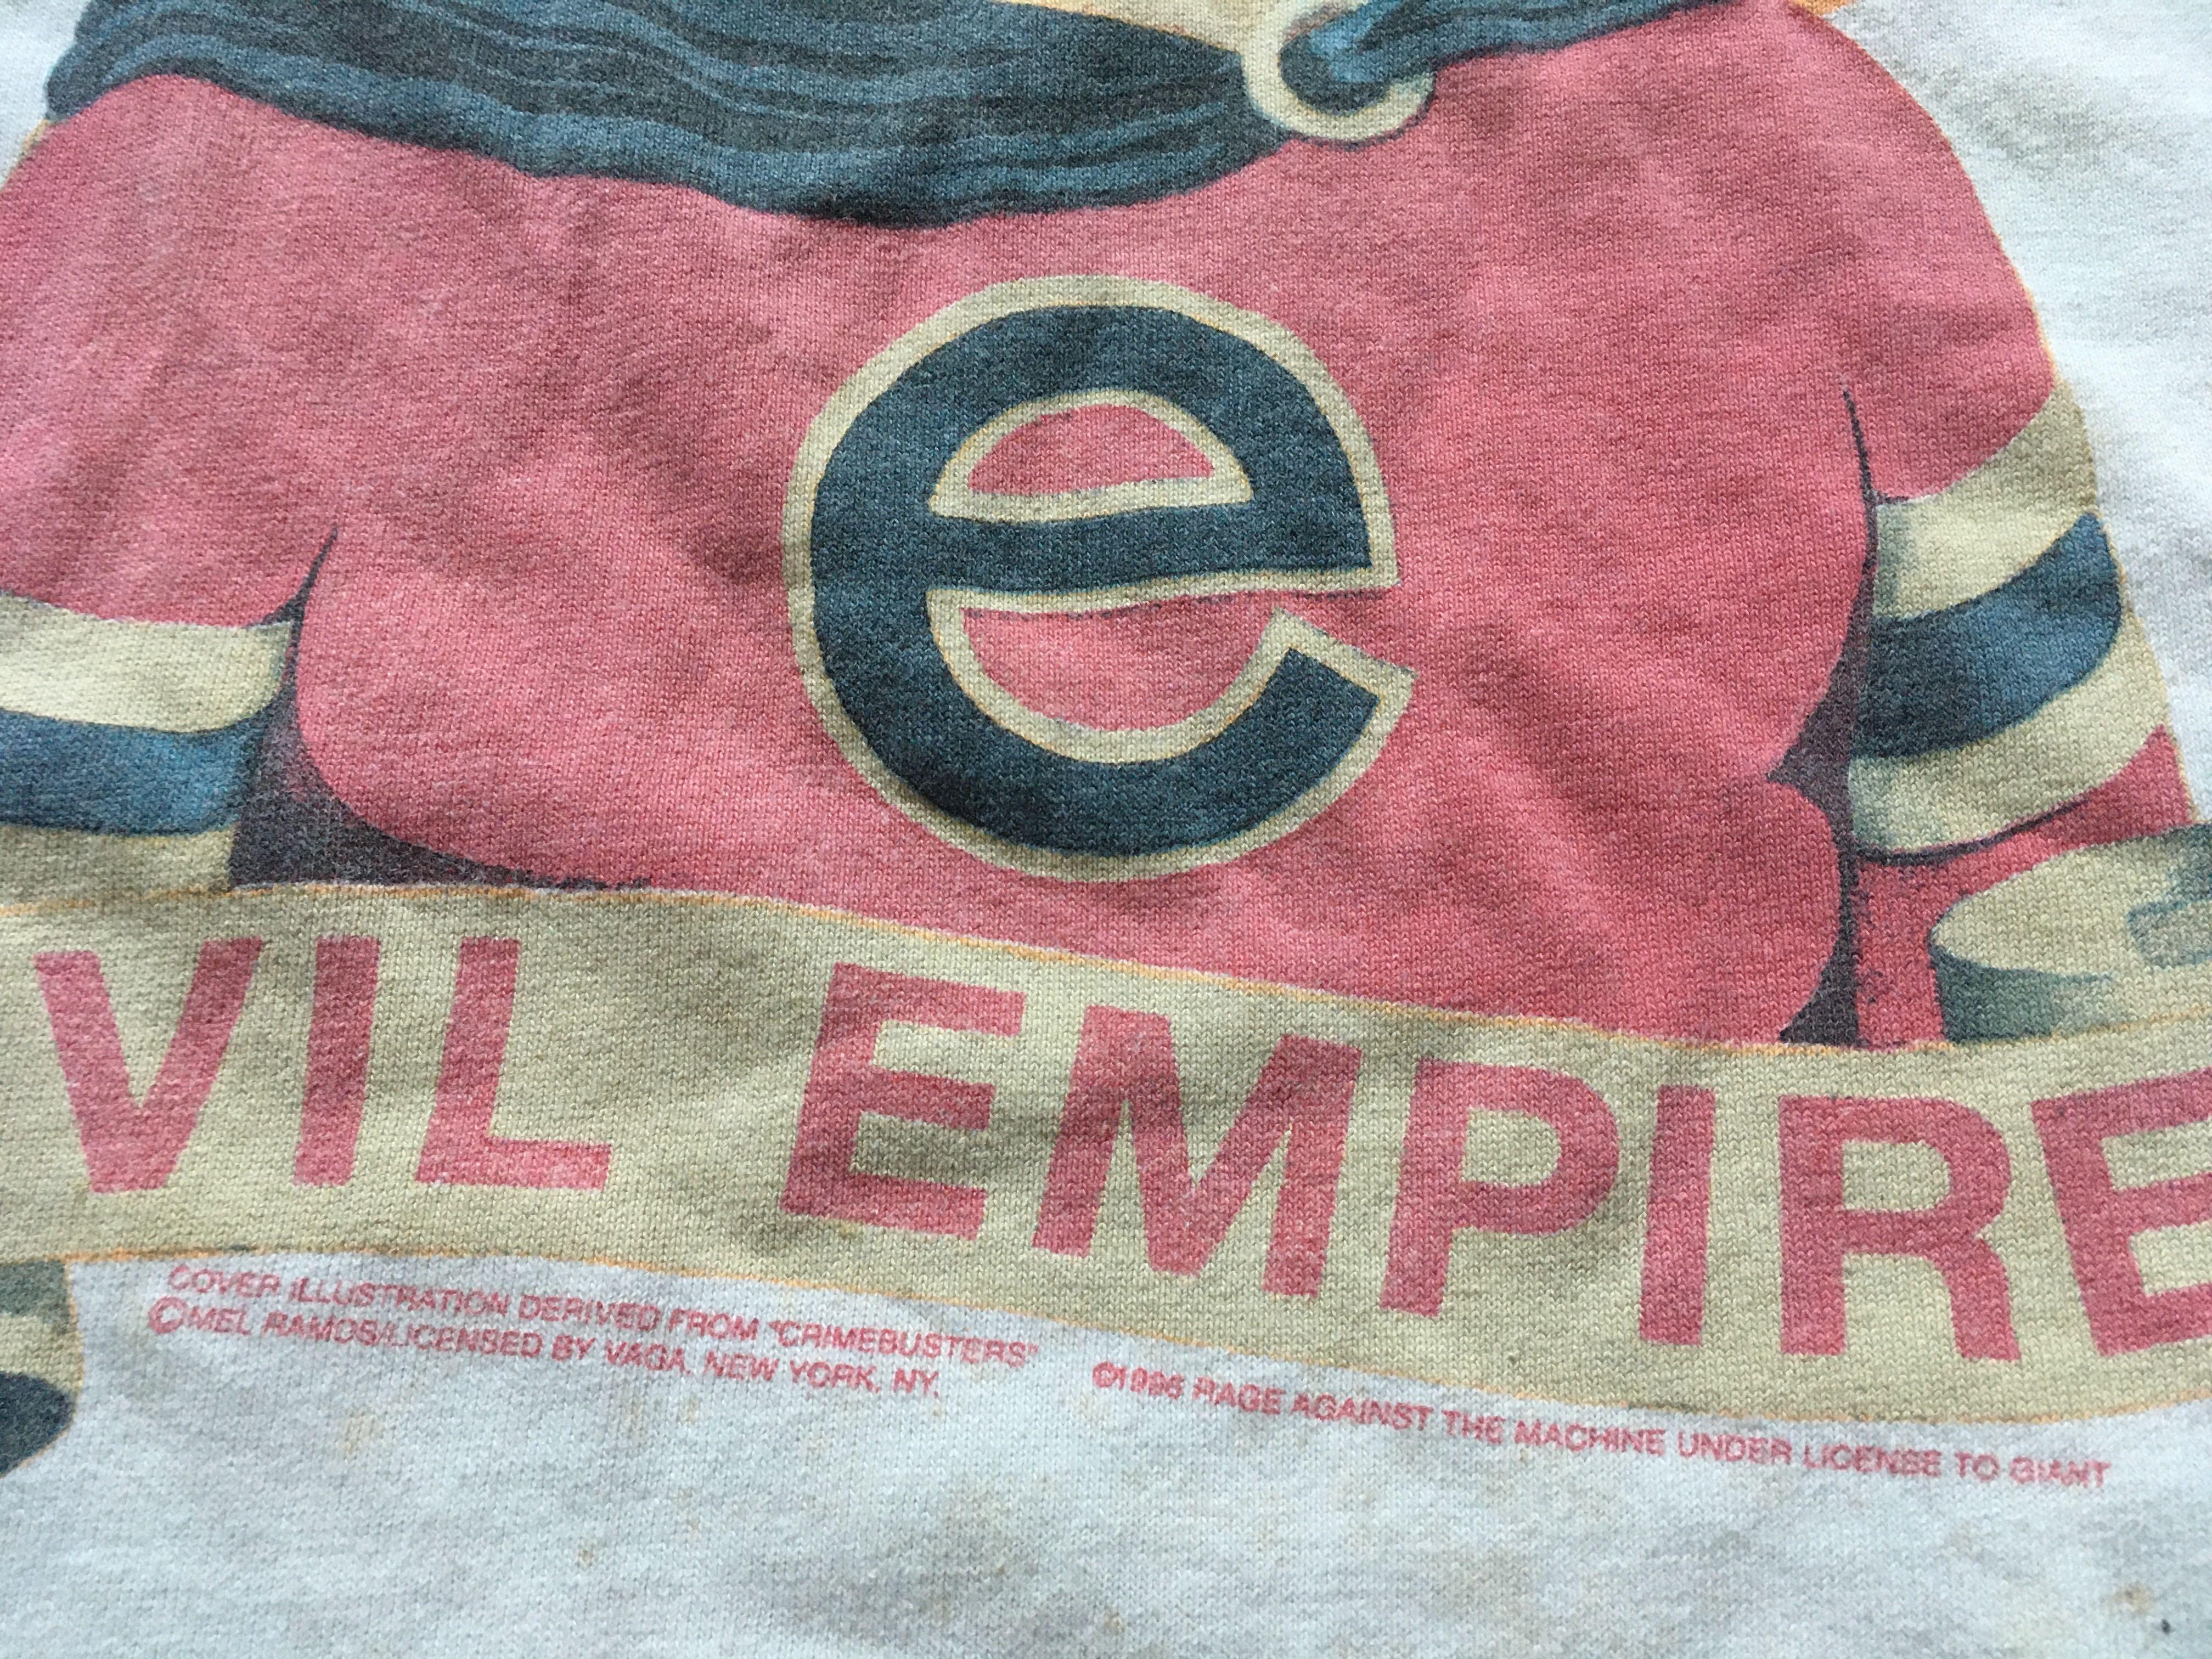 RAGE AGAINST THE MACHINE Evil Empire Ringer T Shirt 90s Vintage